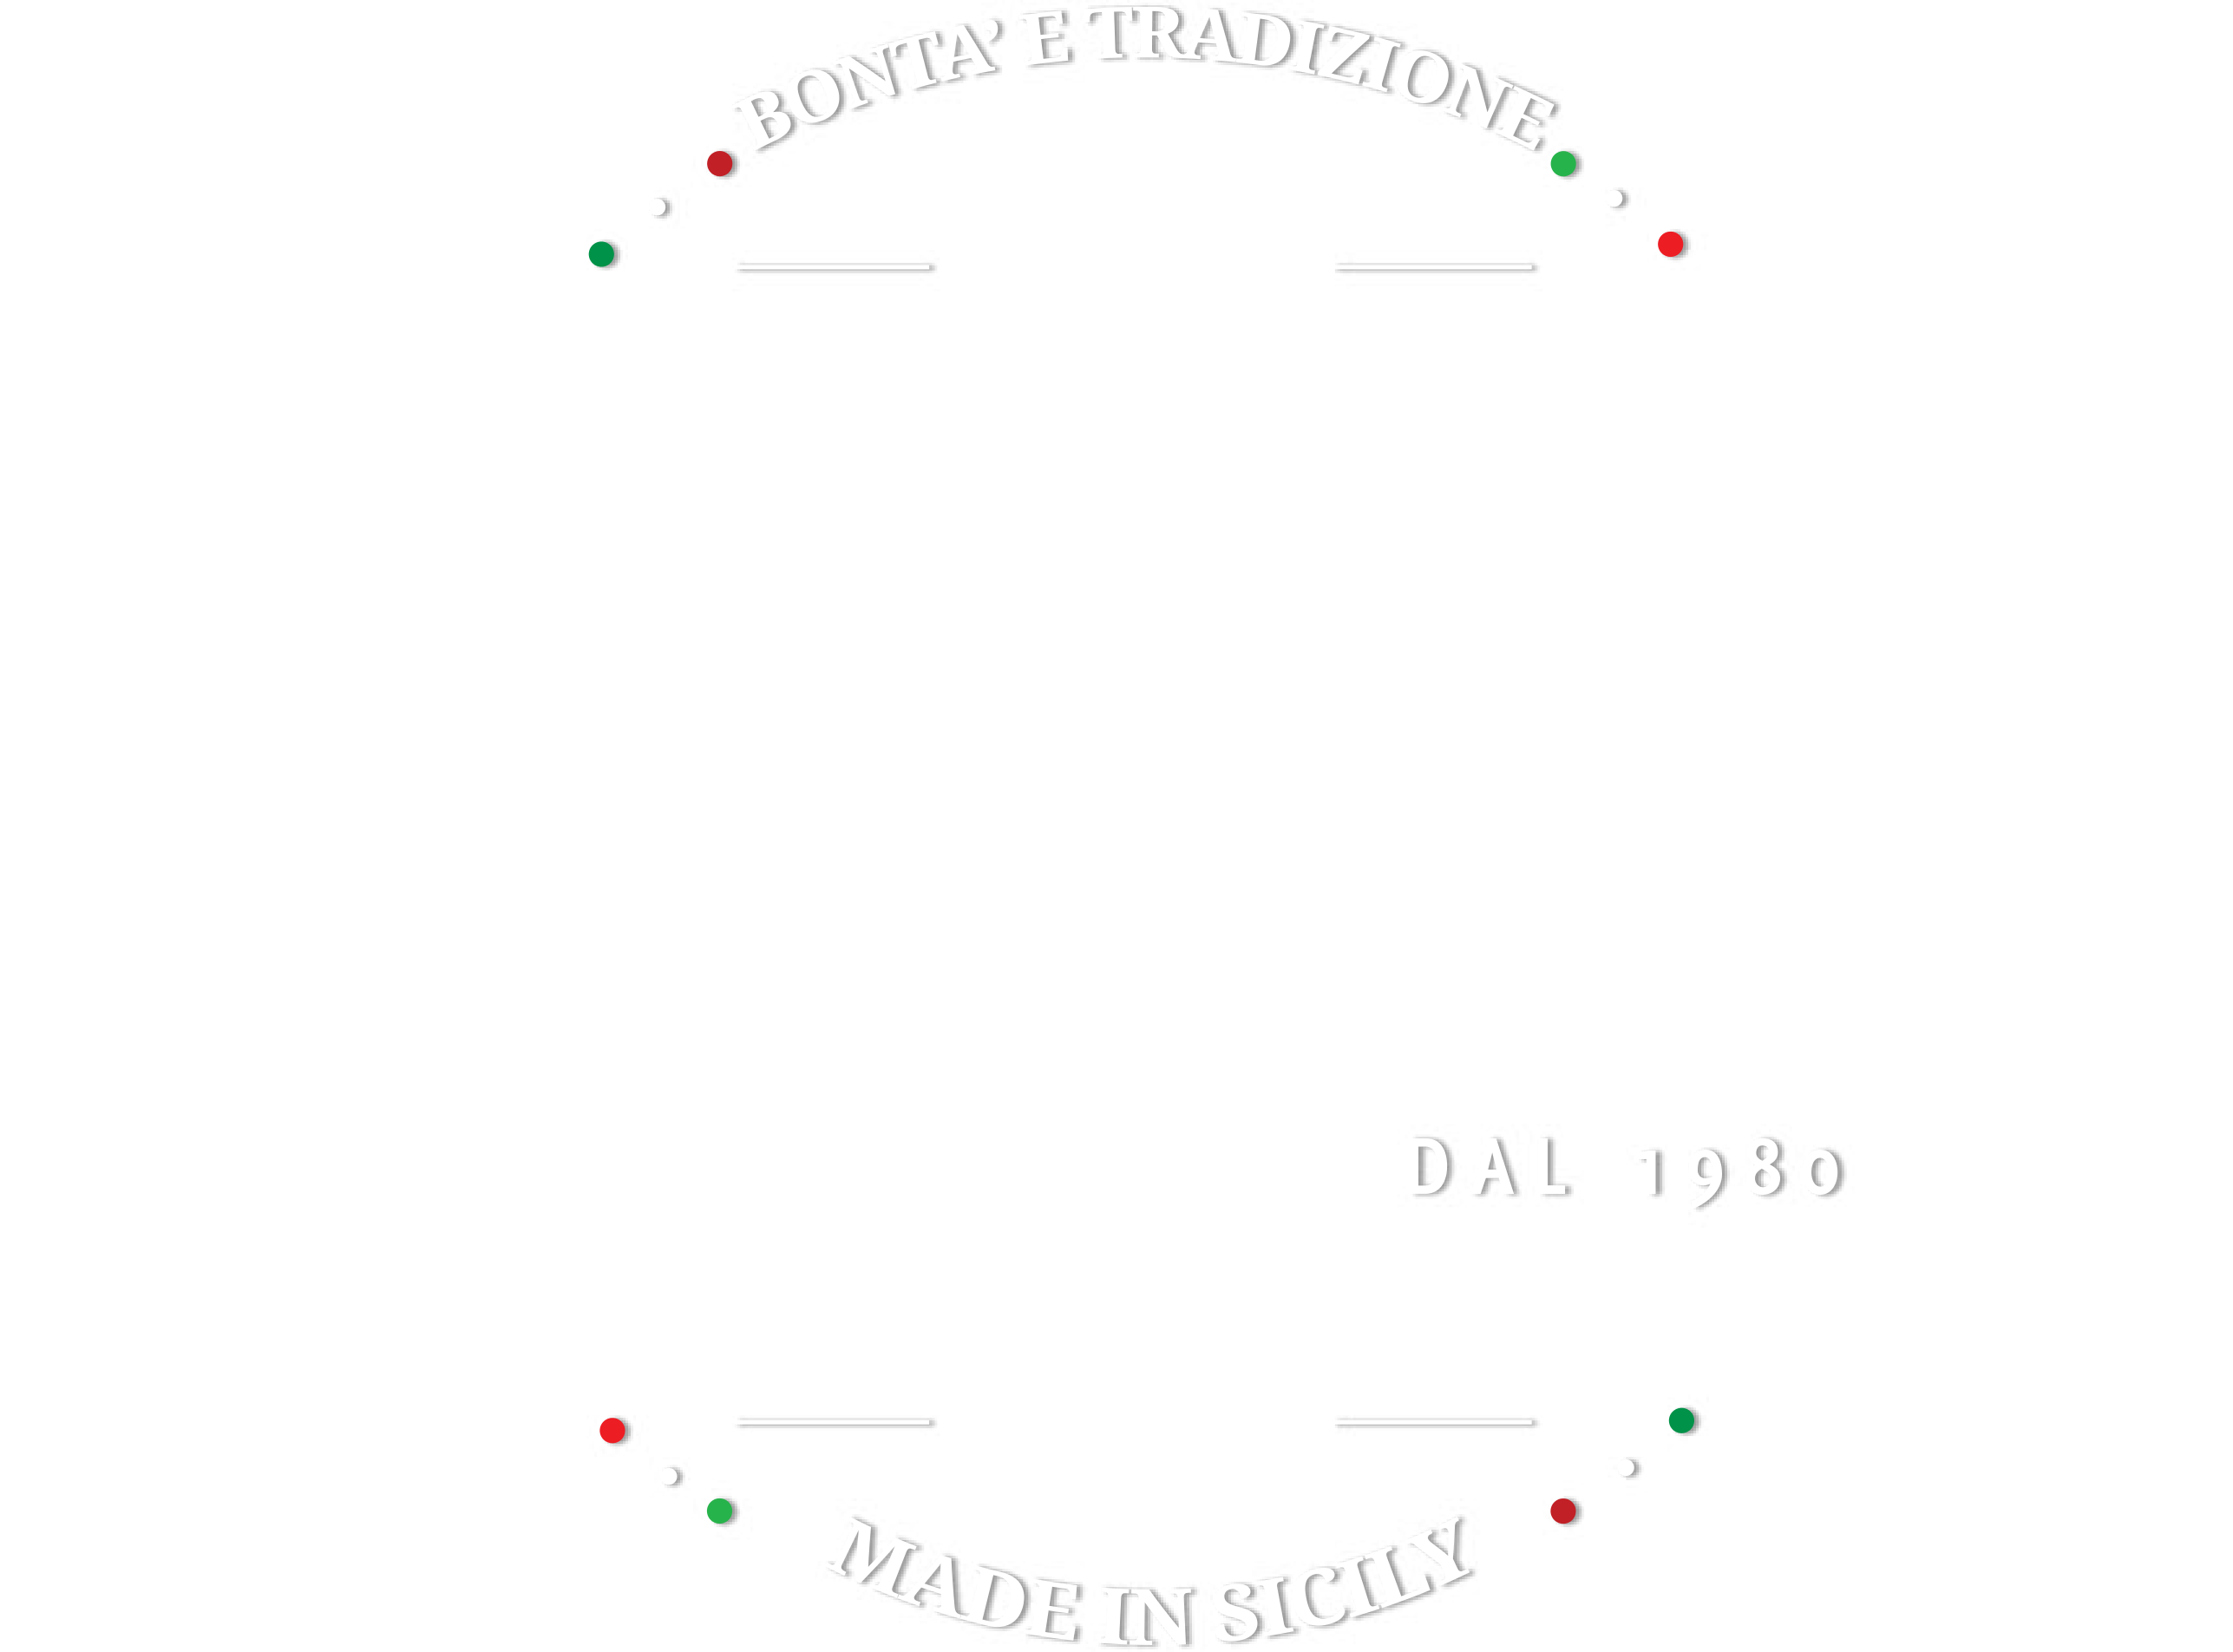 Pasticceria Siragusa